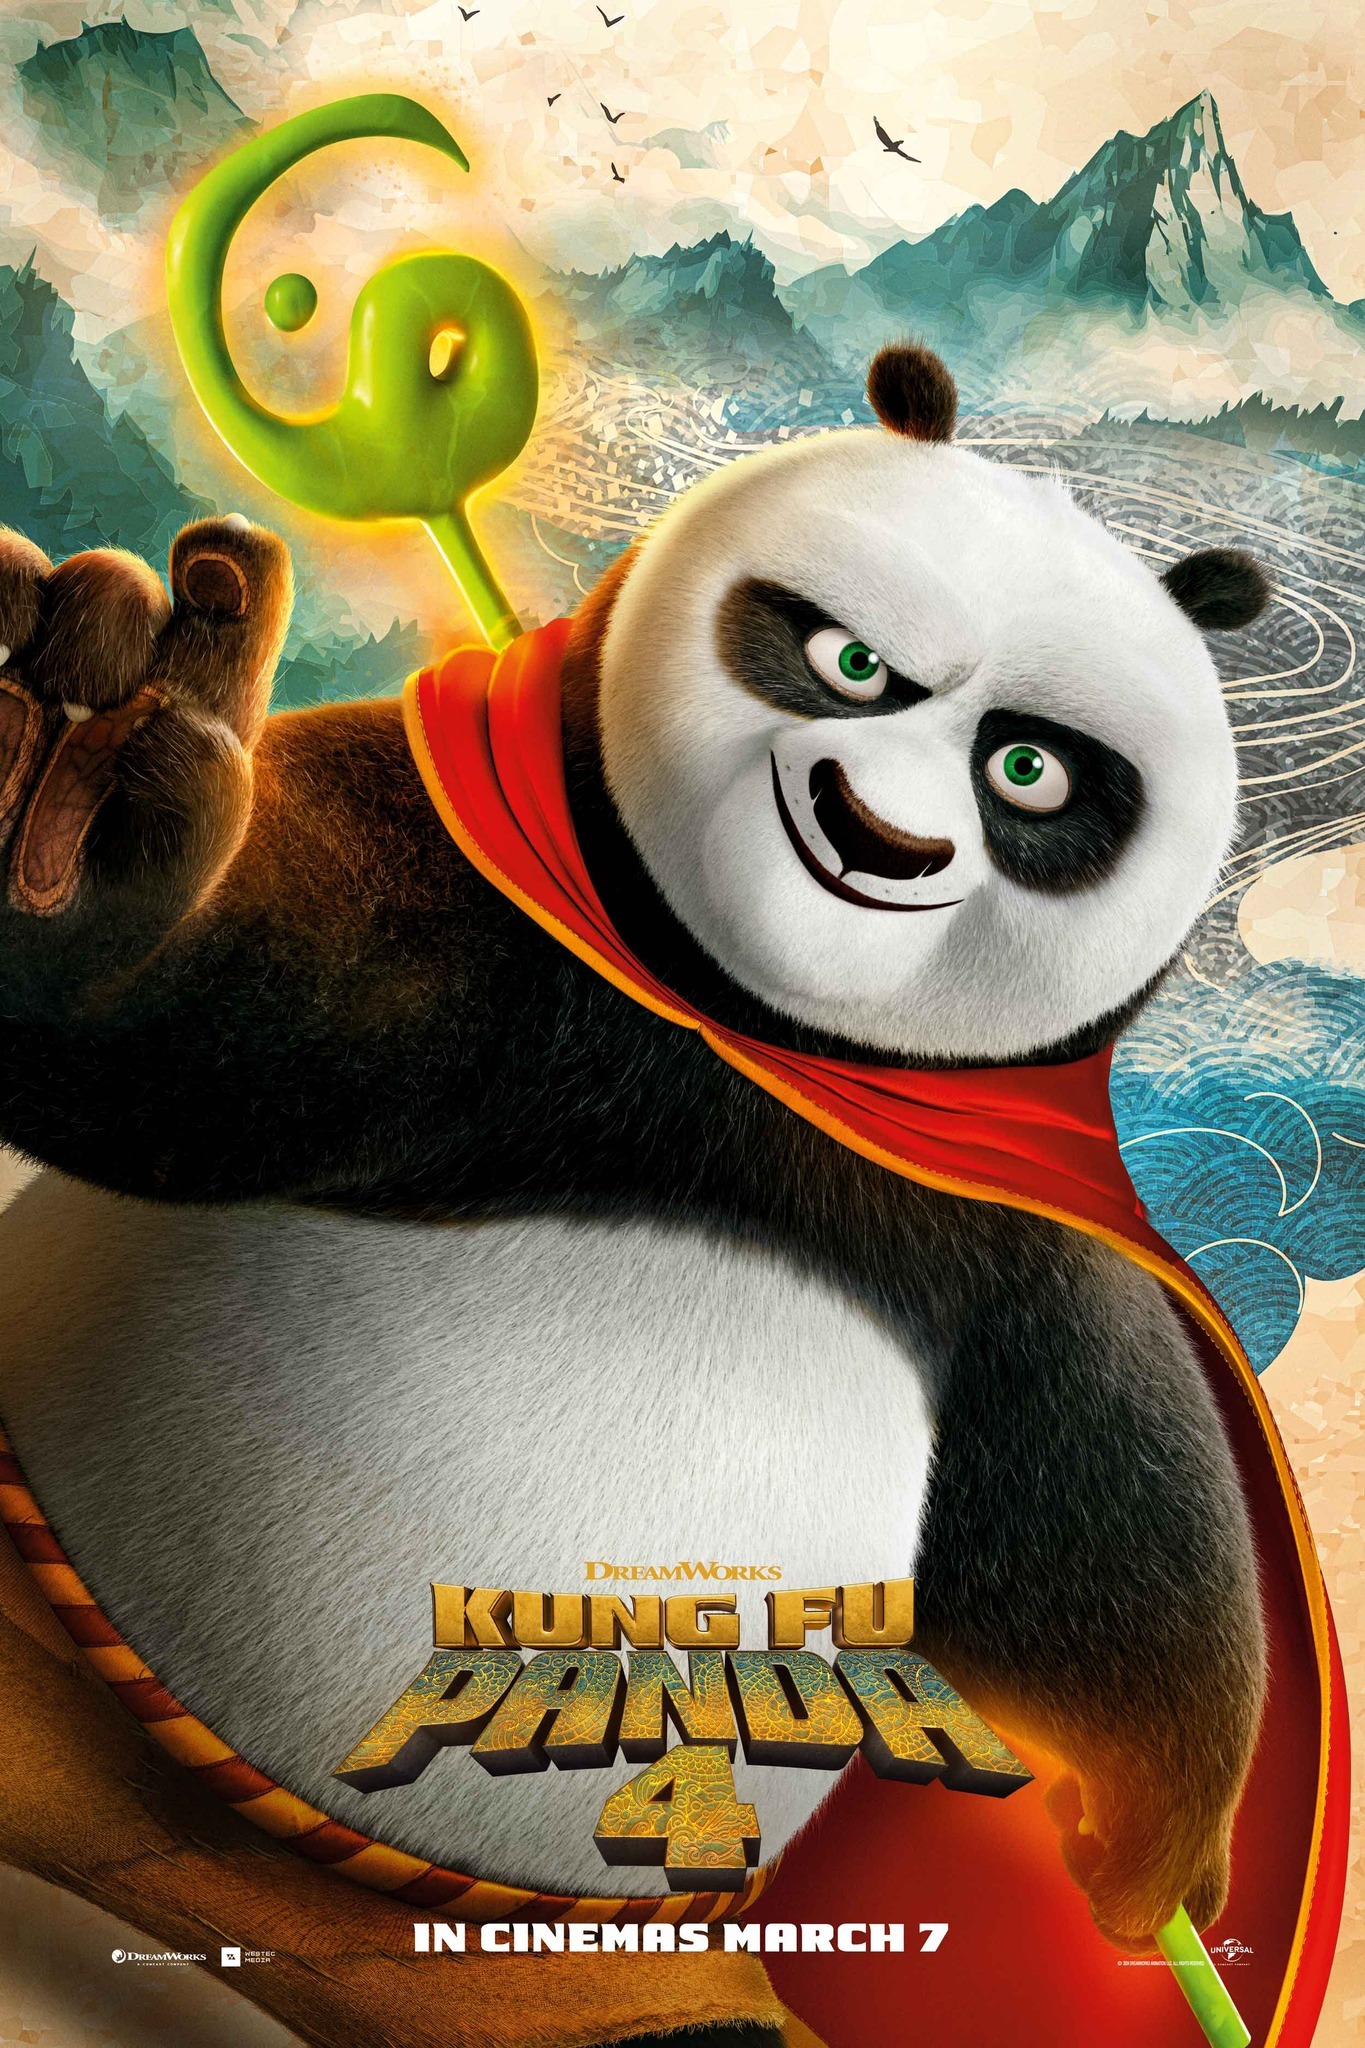 Mega Sized Movie Poster Image for Kung Fu Panda 4 (#5 of 20)